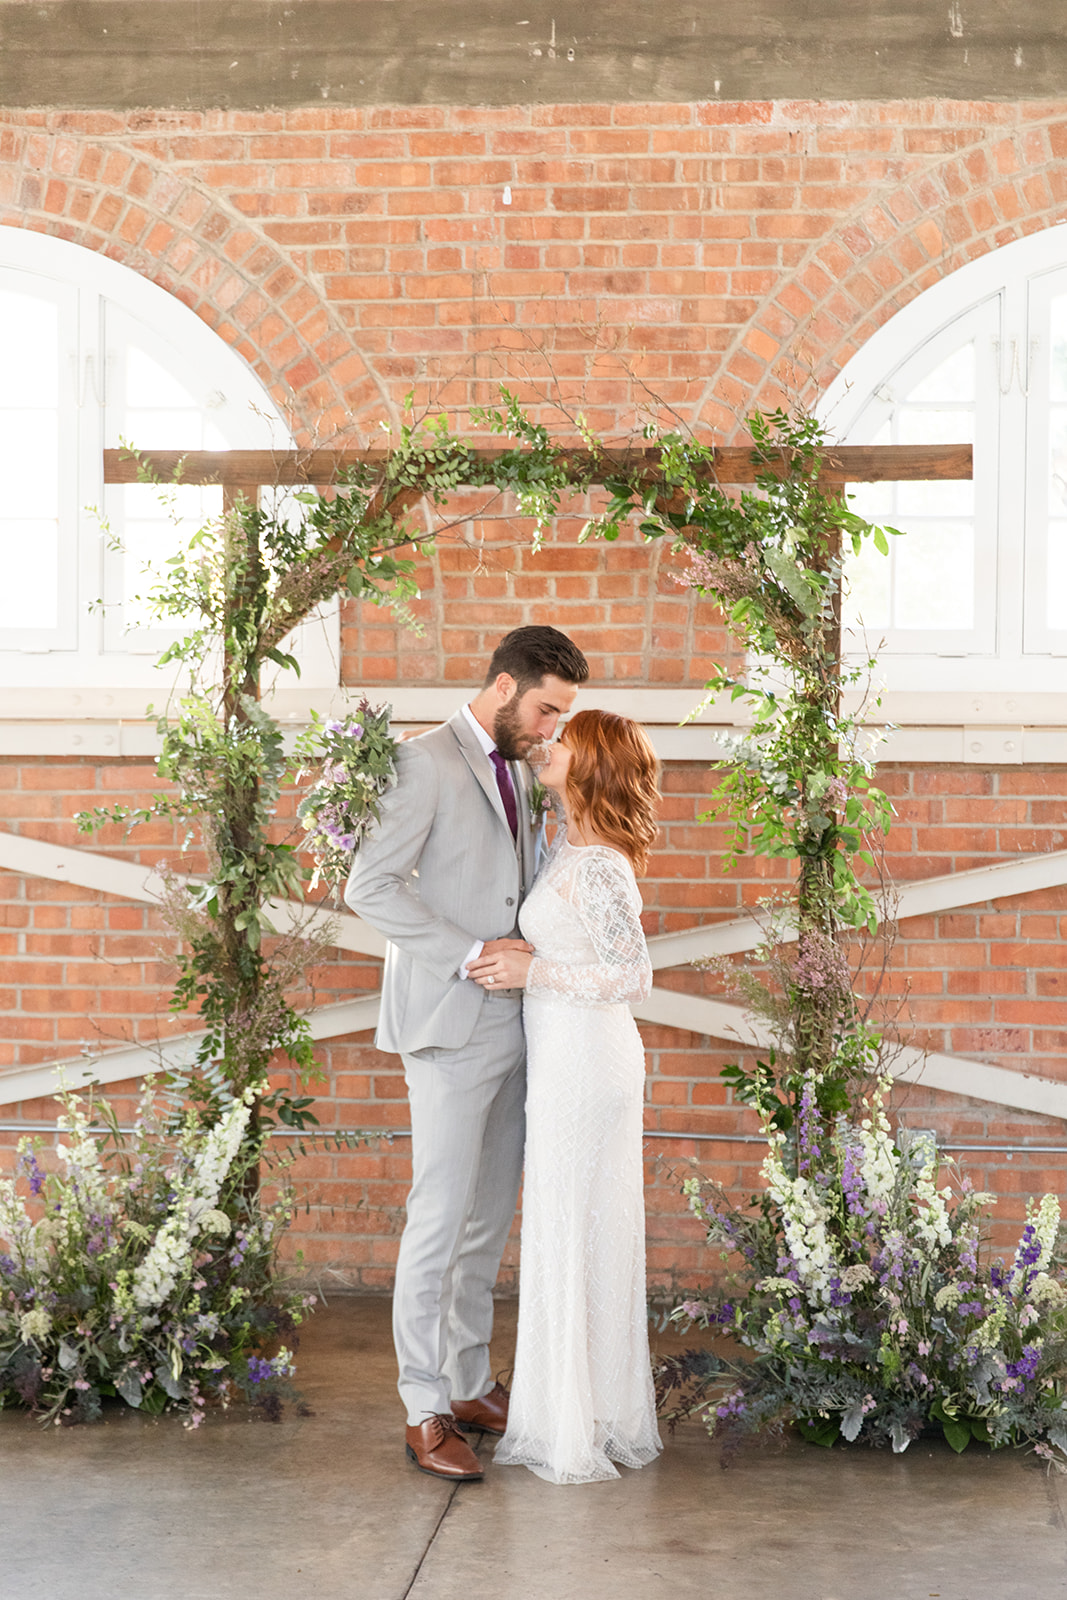 wedding arch, flowers, first kiss